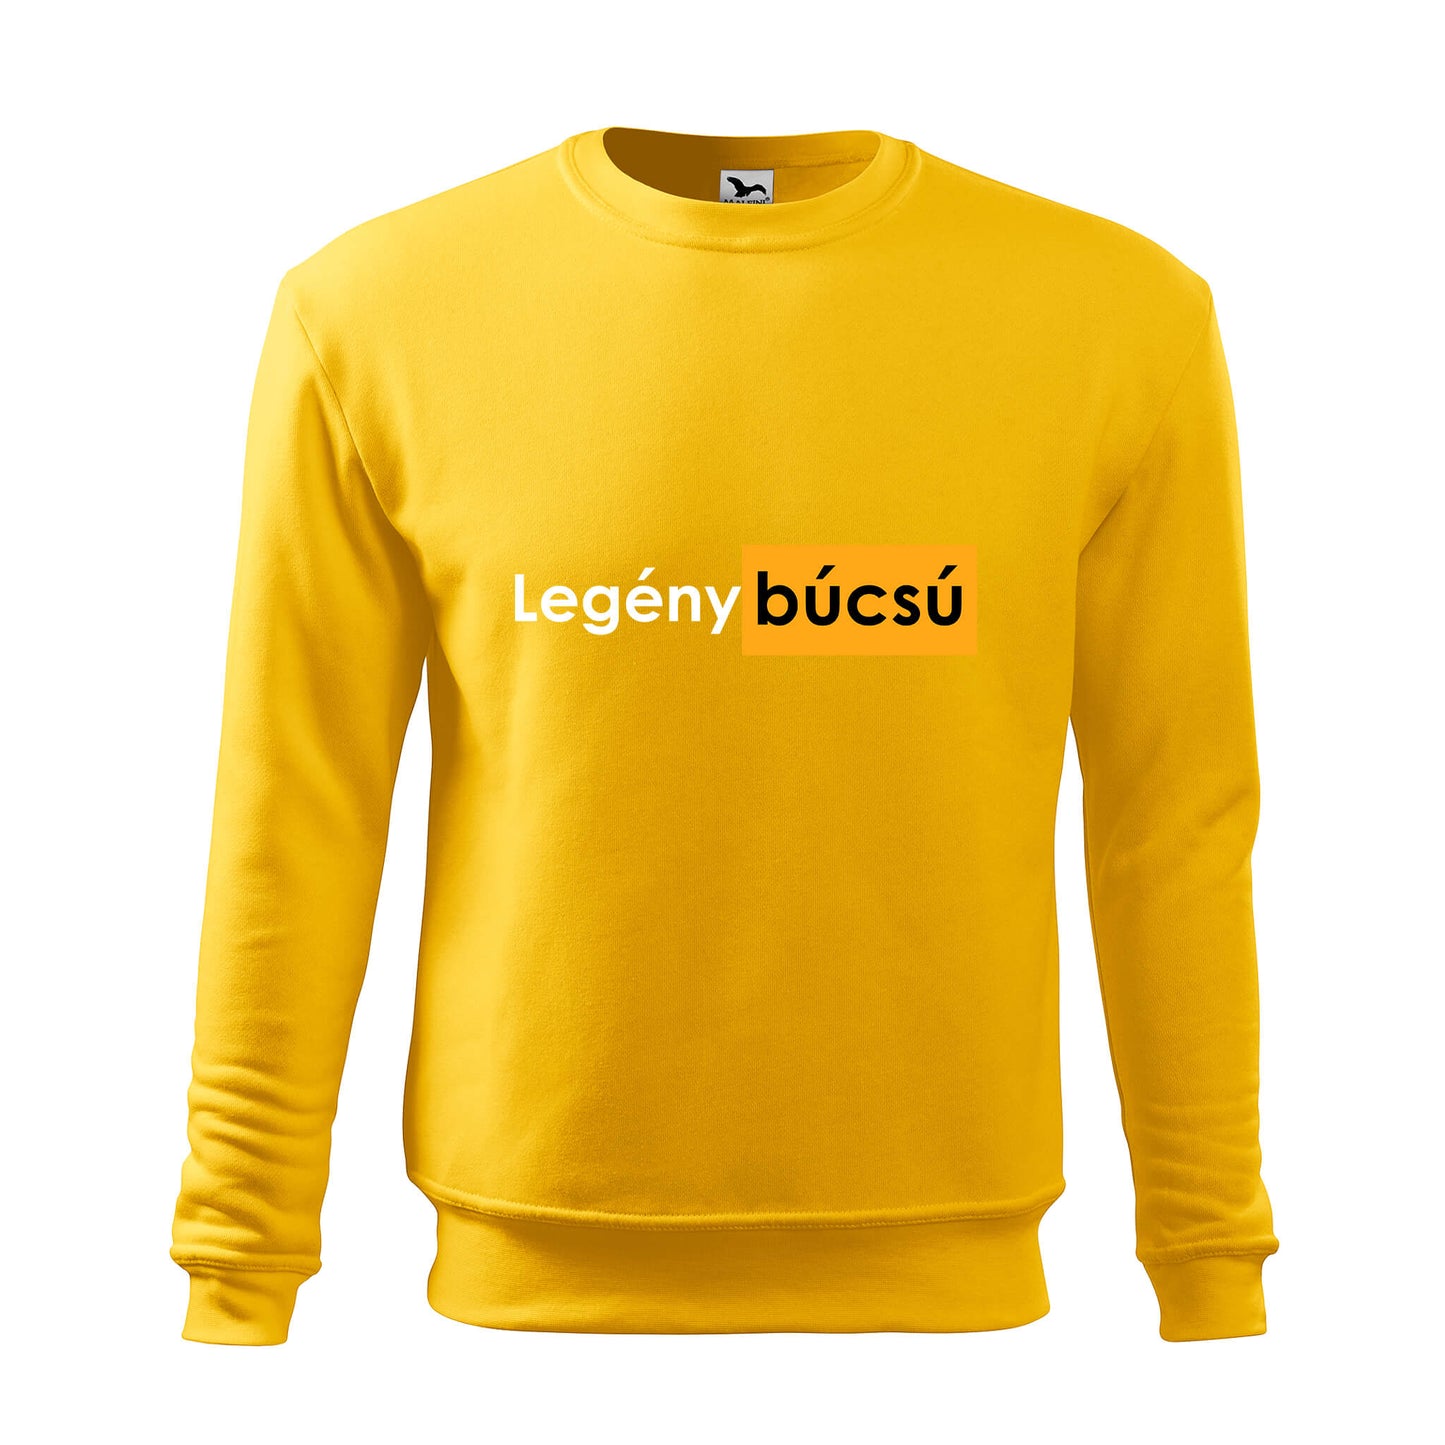 Legenybucsu pornhub logo feher sweatshirt - rvdesignprint